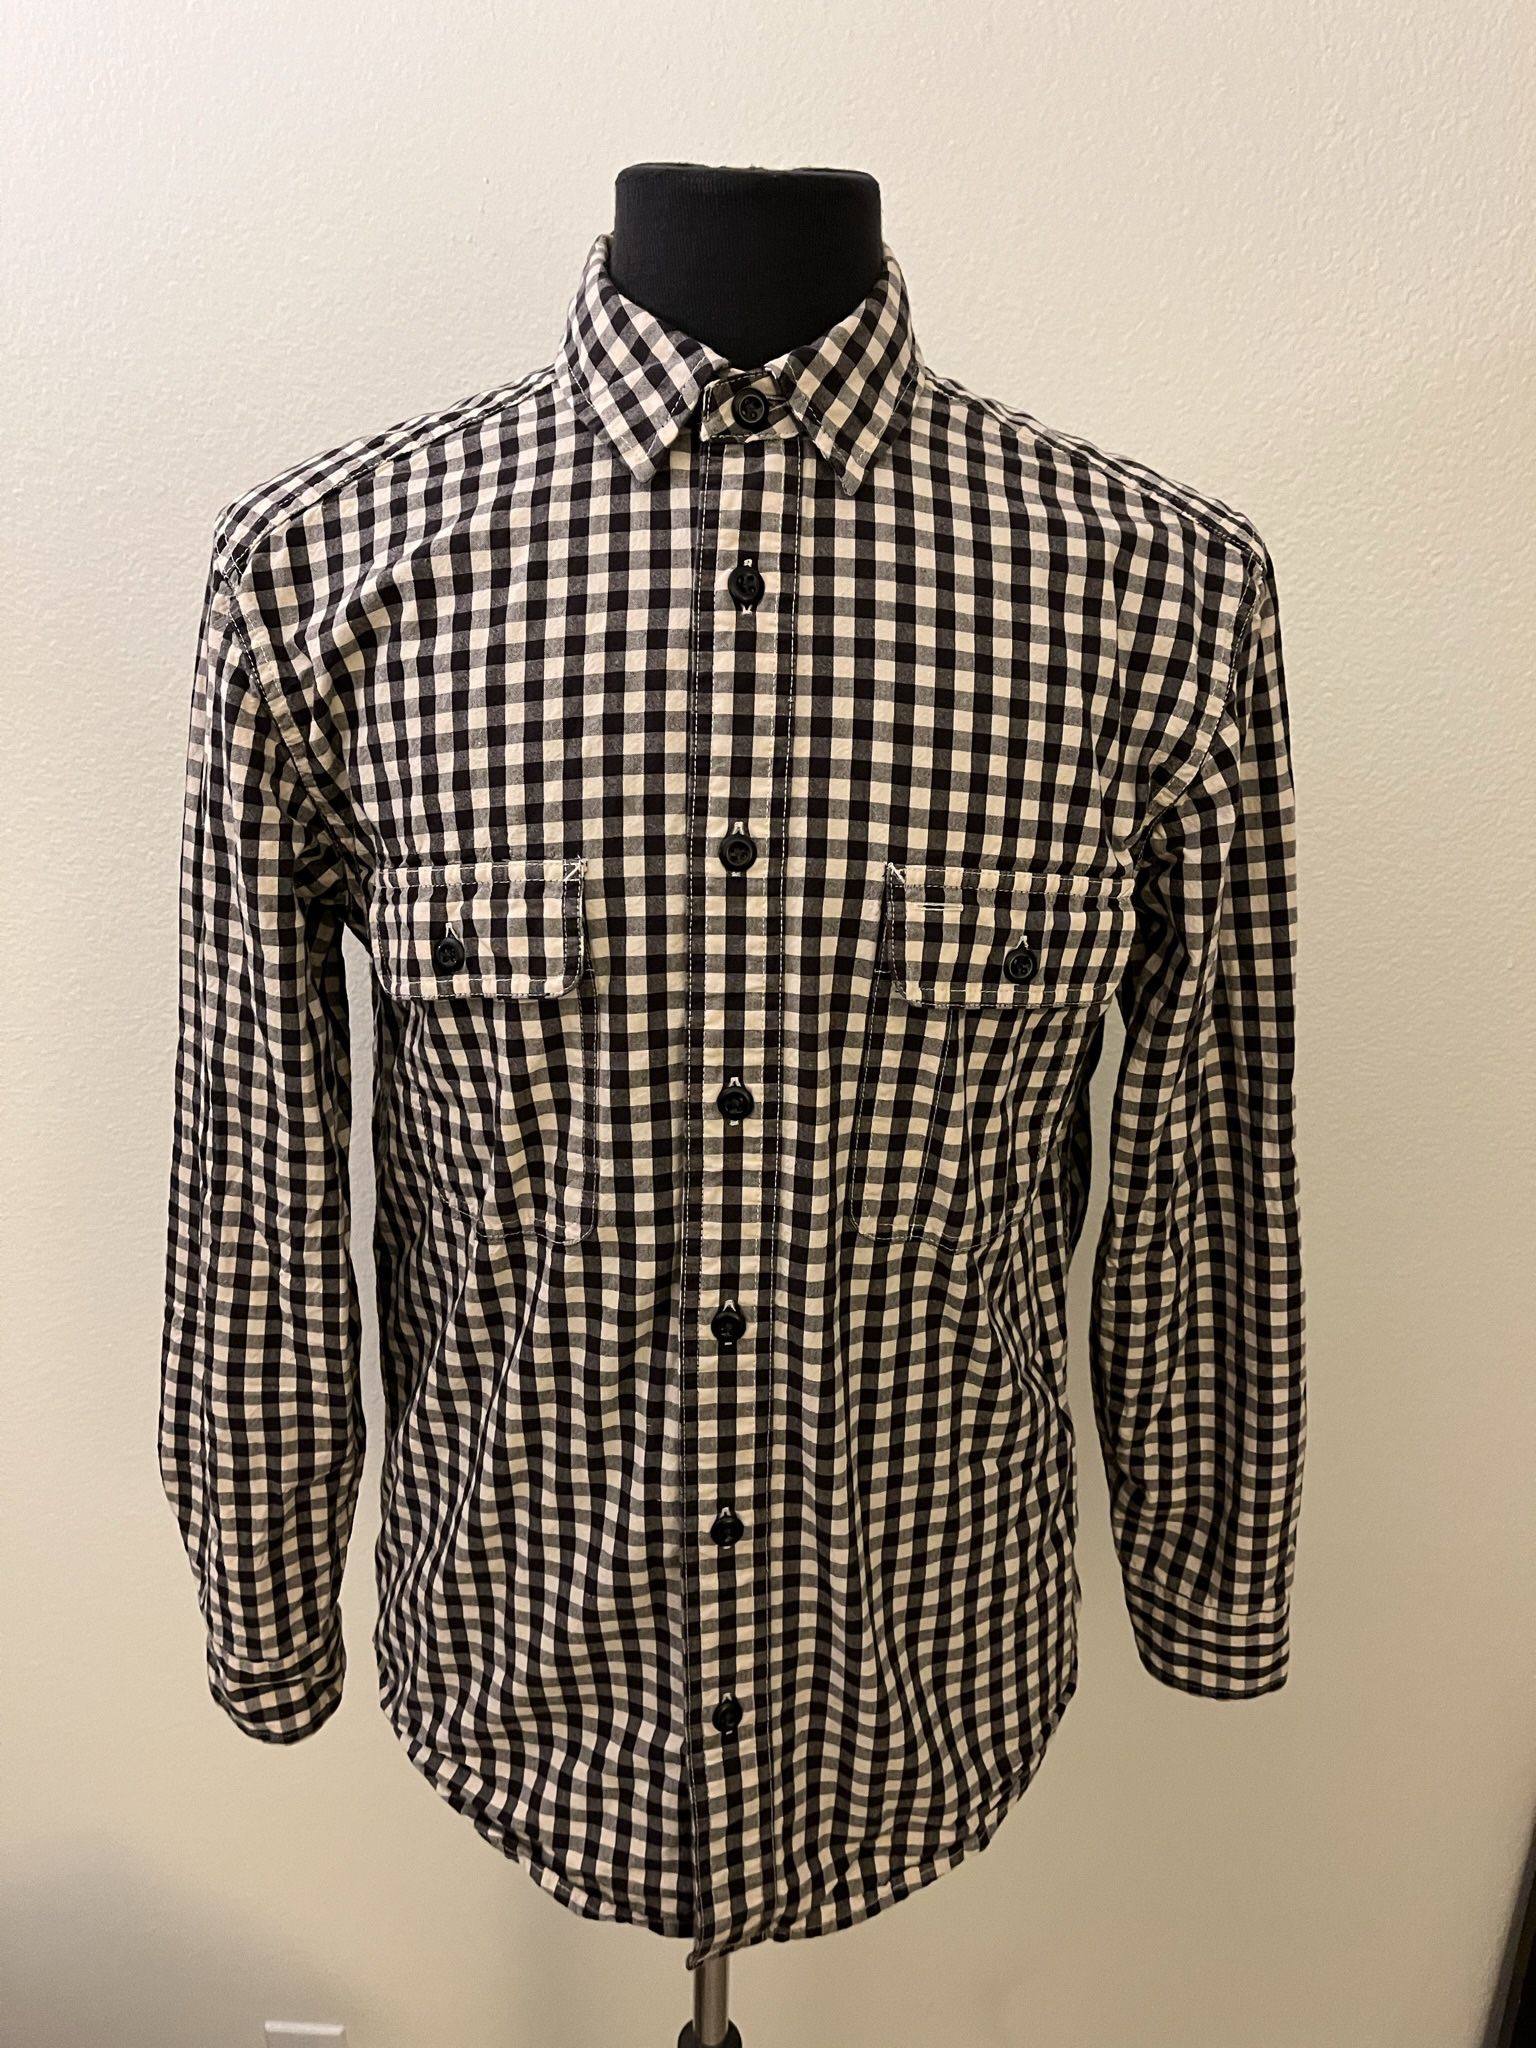 Filson Vintage Flannel Work Shirt Black Gray & Cream Plaid Mens Regular Size S